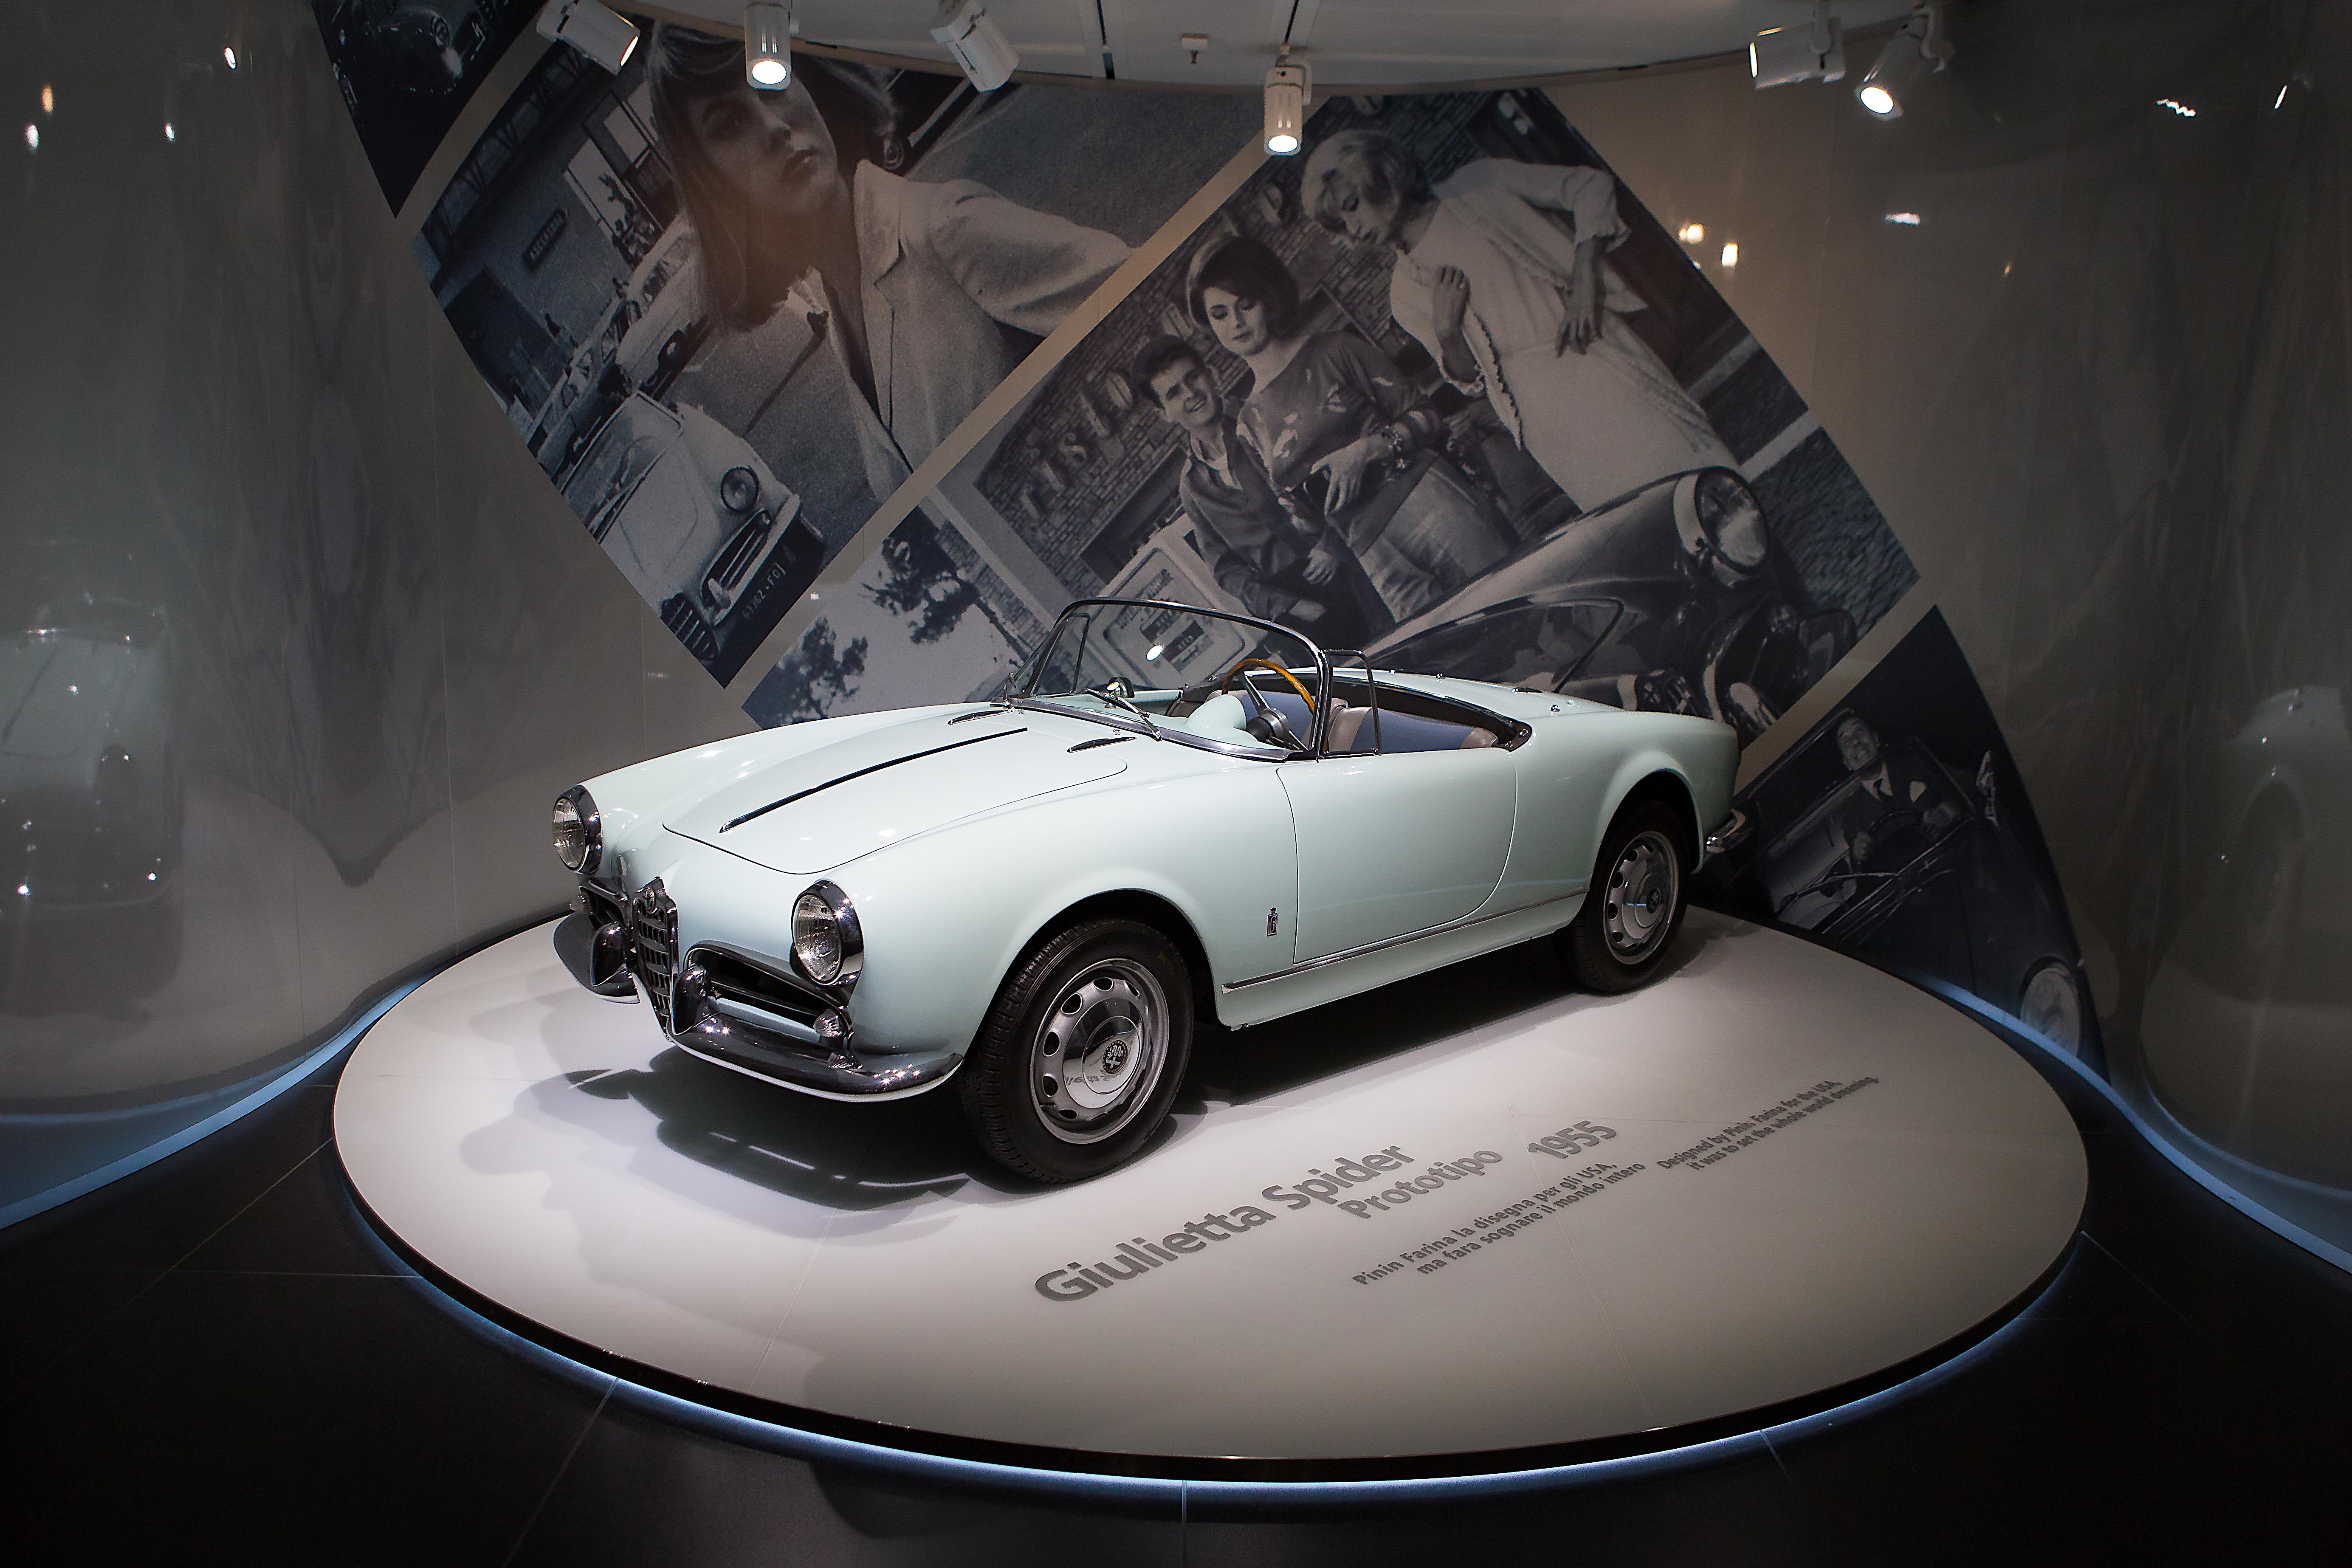 1955 Alfa Romeo Giulietta vehicle information